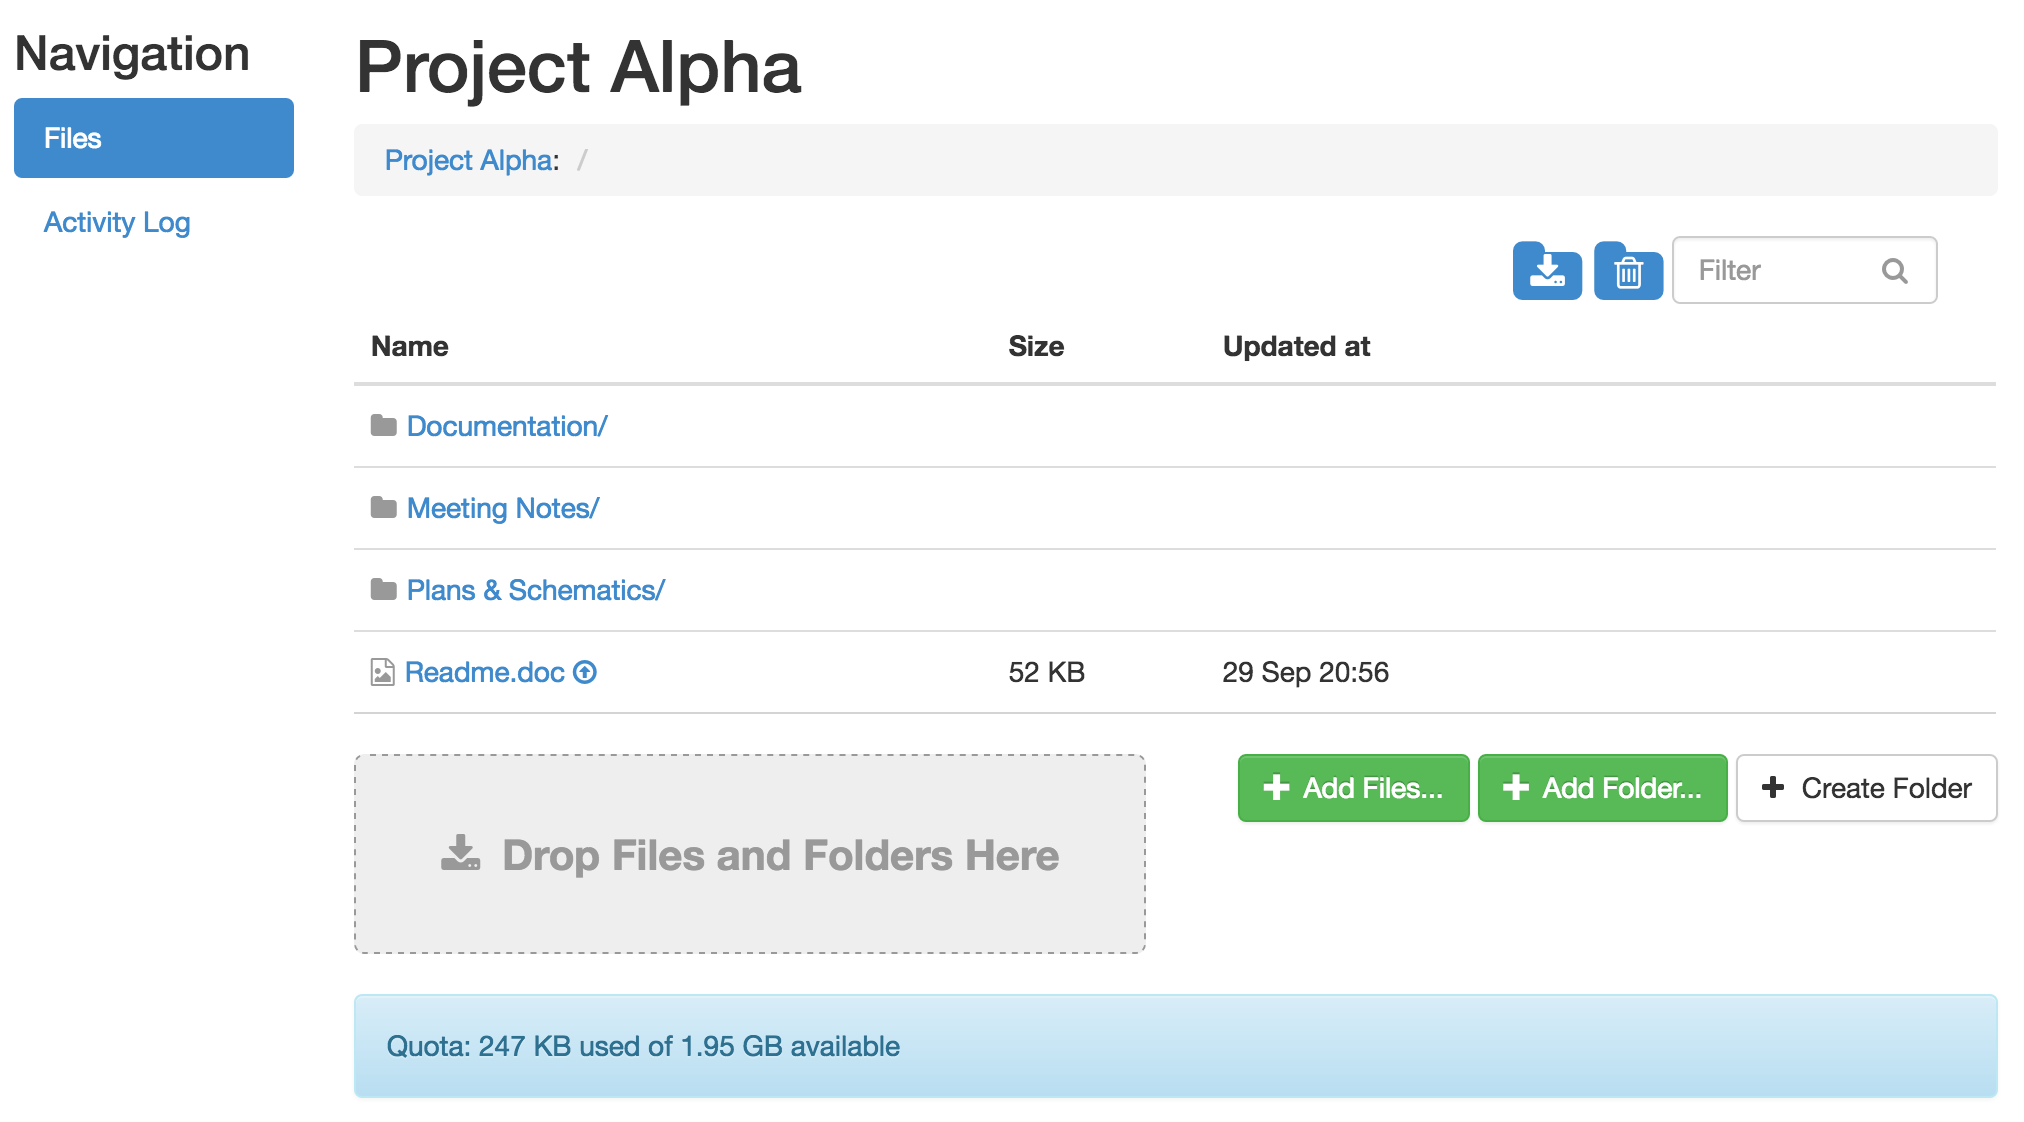 Share Files & Folder Example